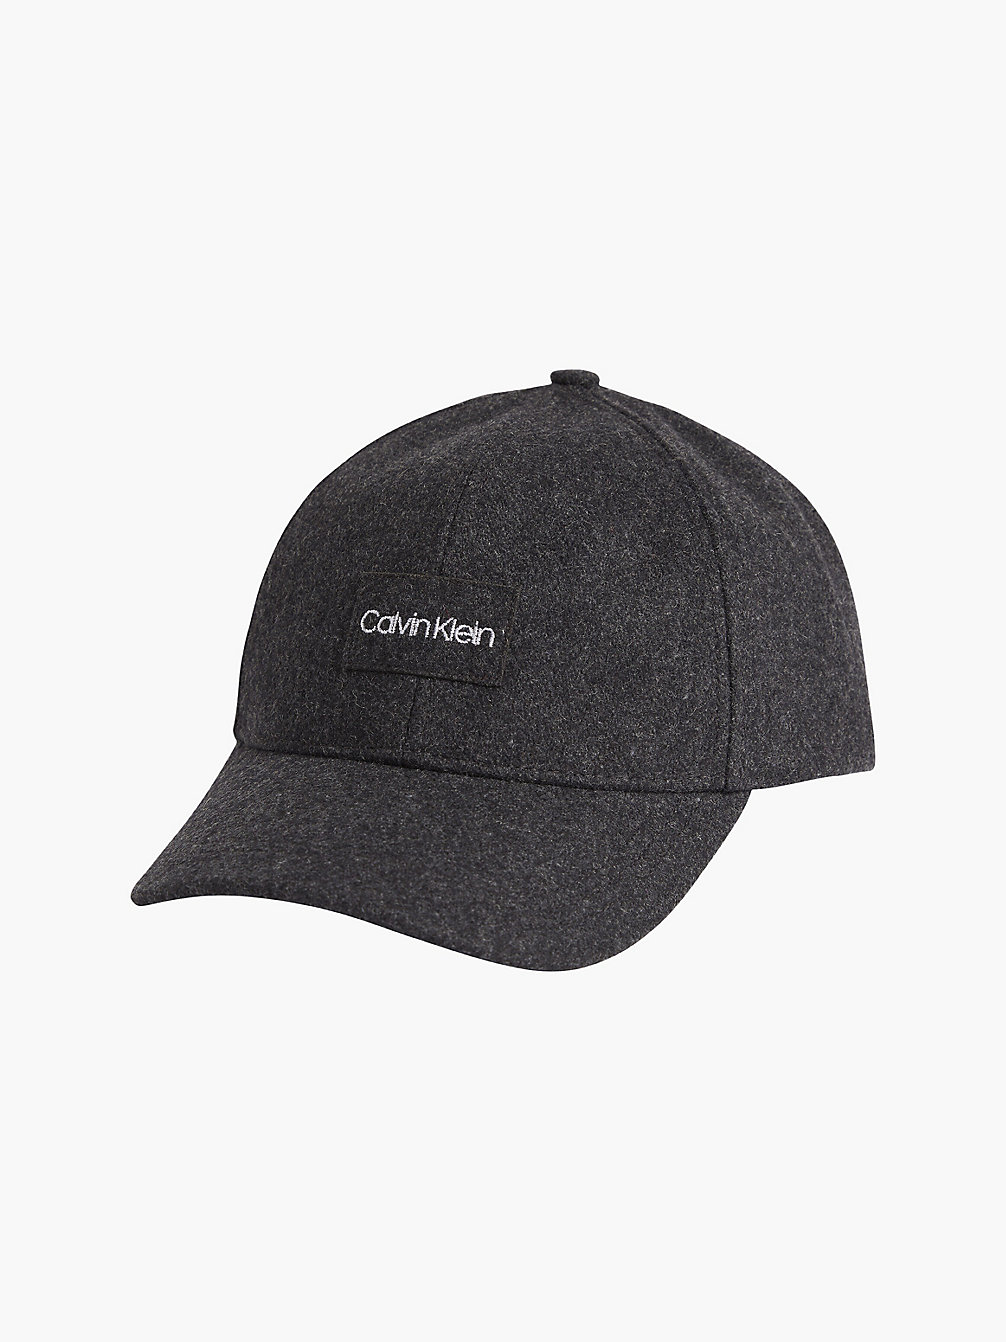 MEDIUM CHARCOAL Wool Blend Cap undefined men Calvin Klein